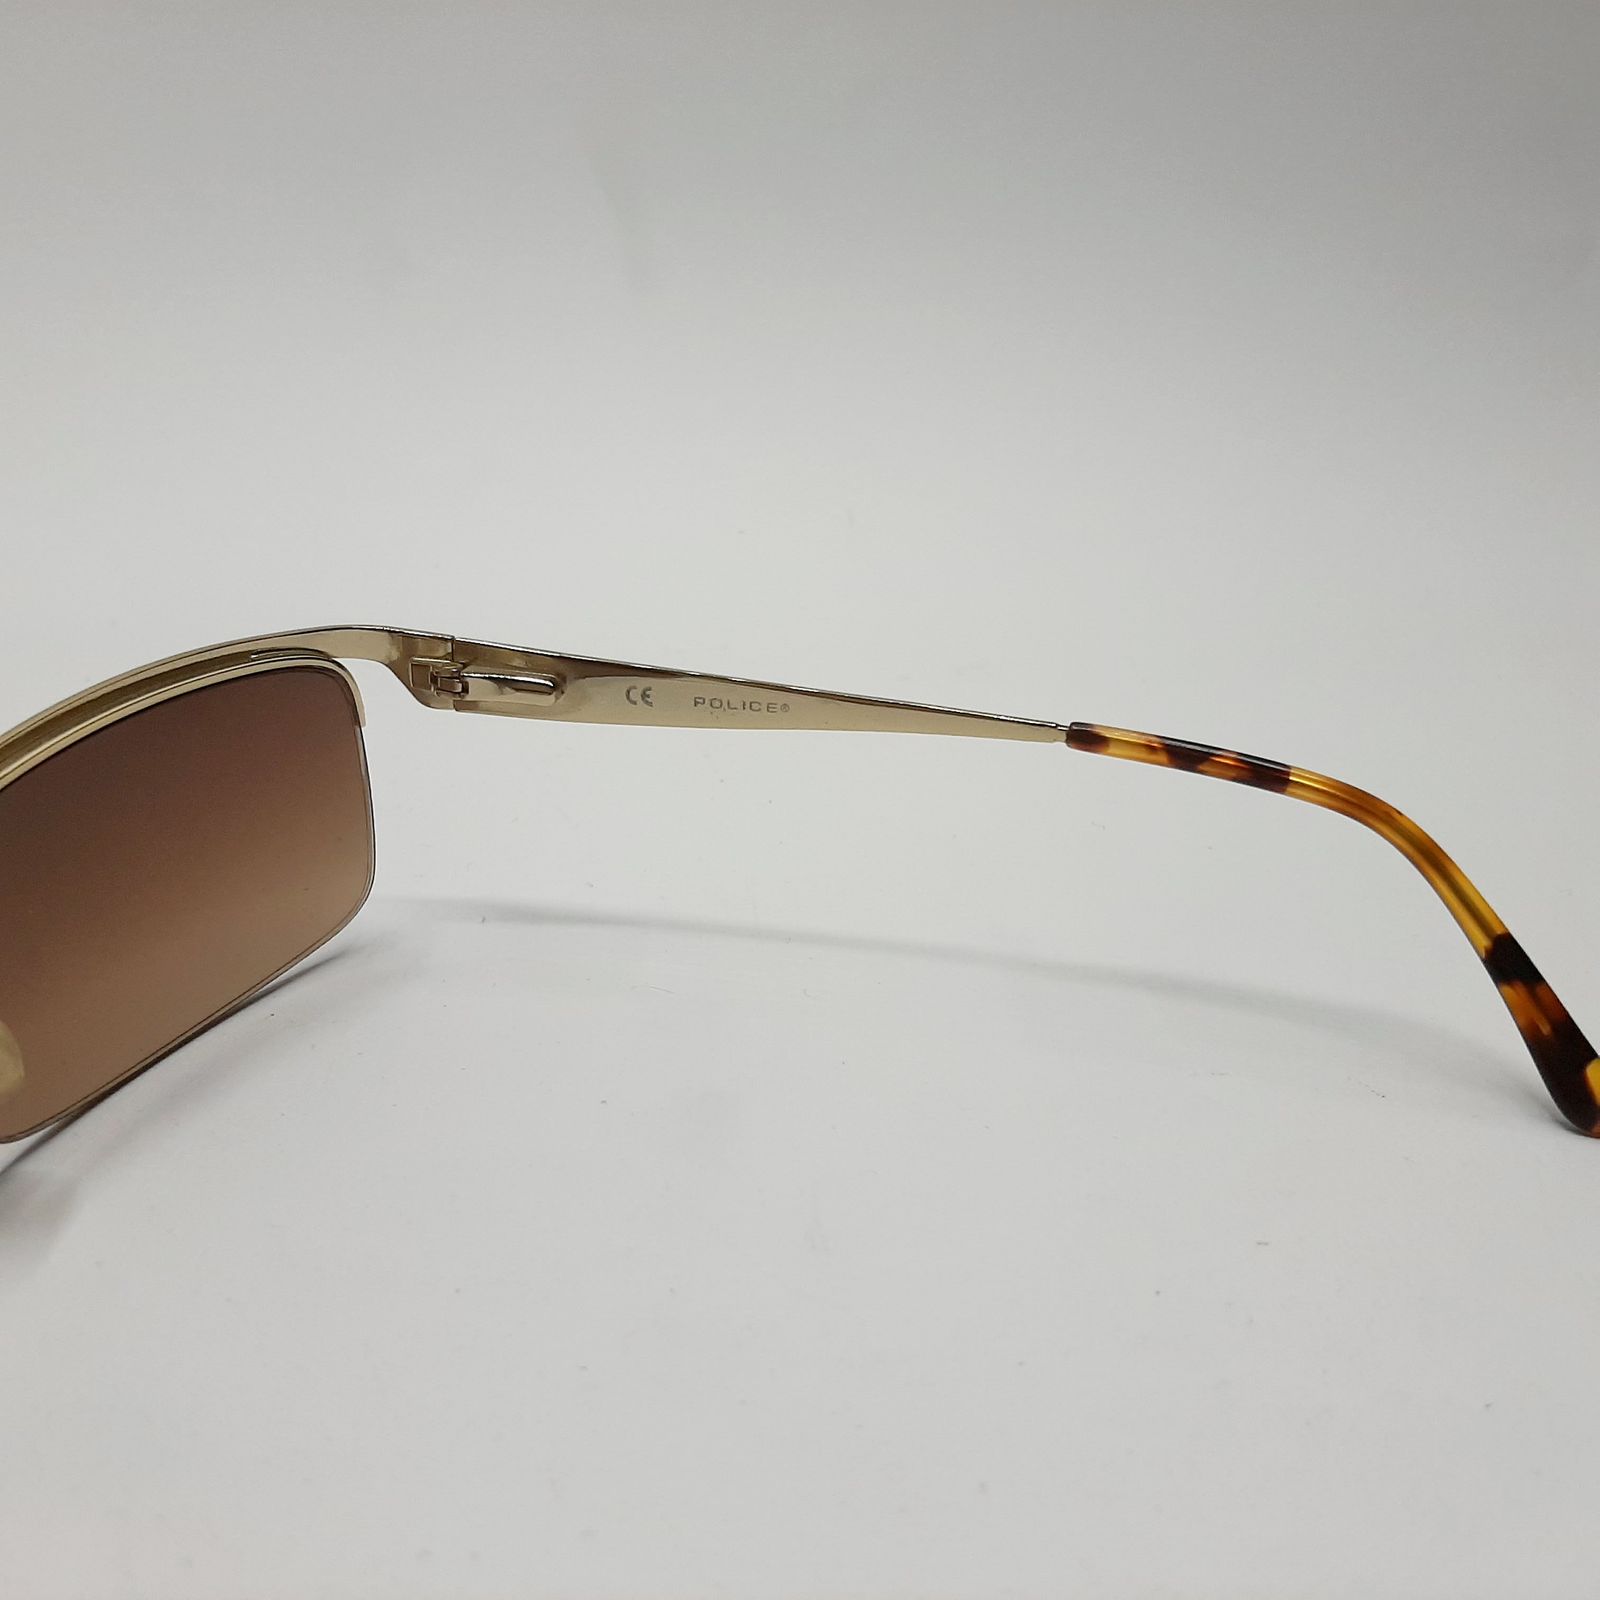 عینک آفتابی پلیس مدل S8405c3 -  - 7